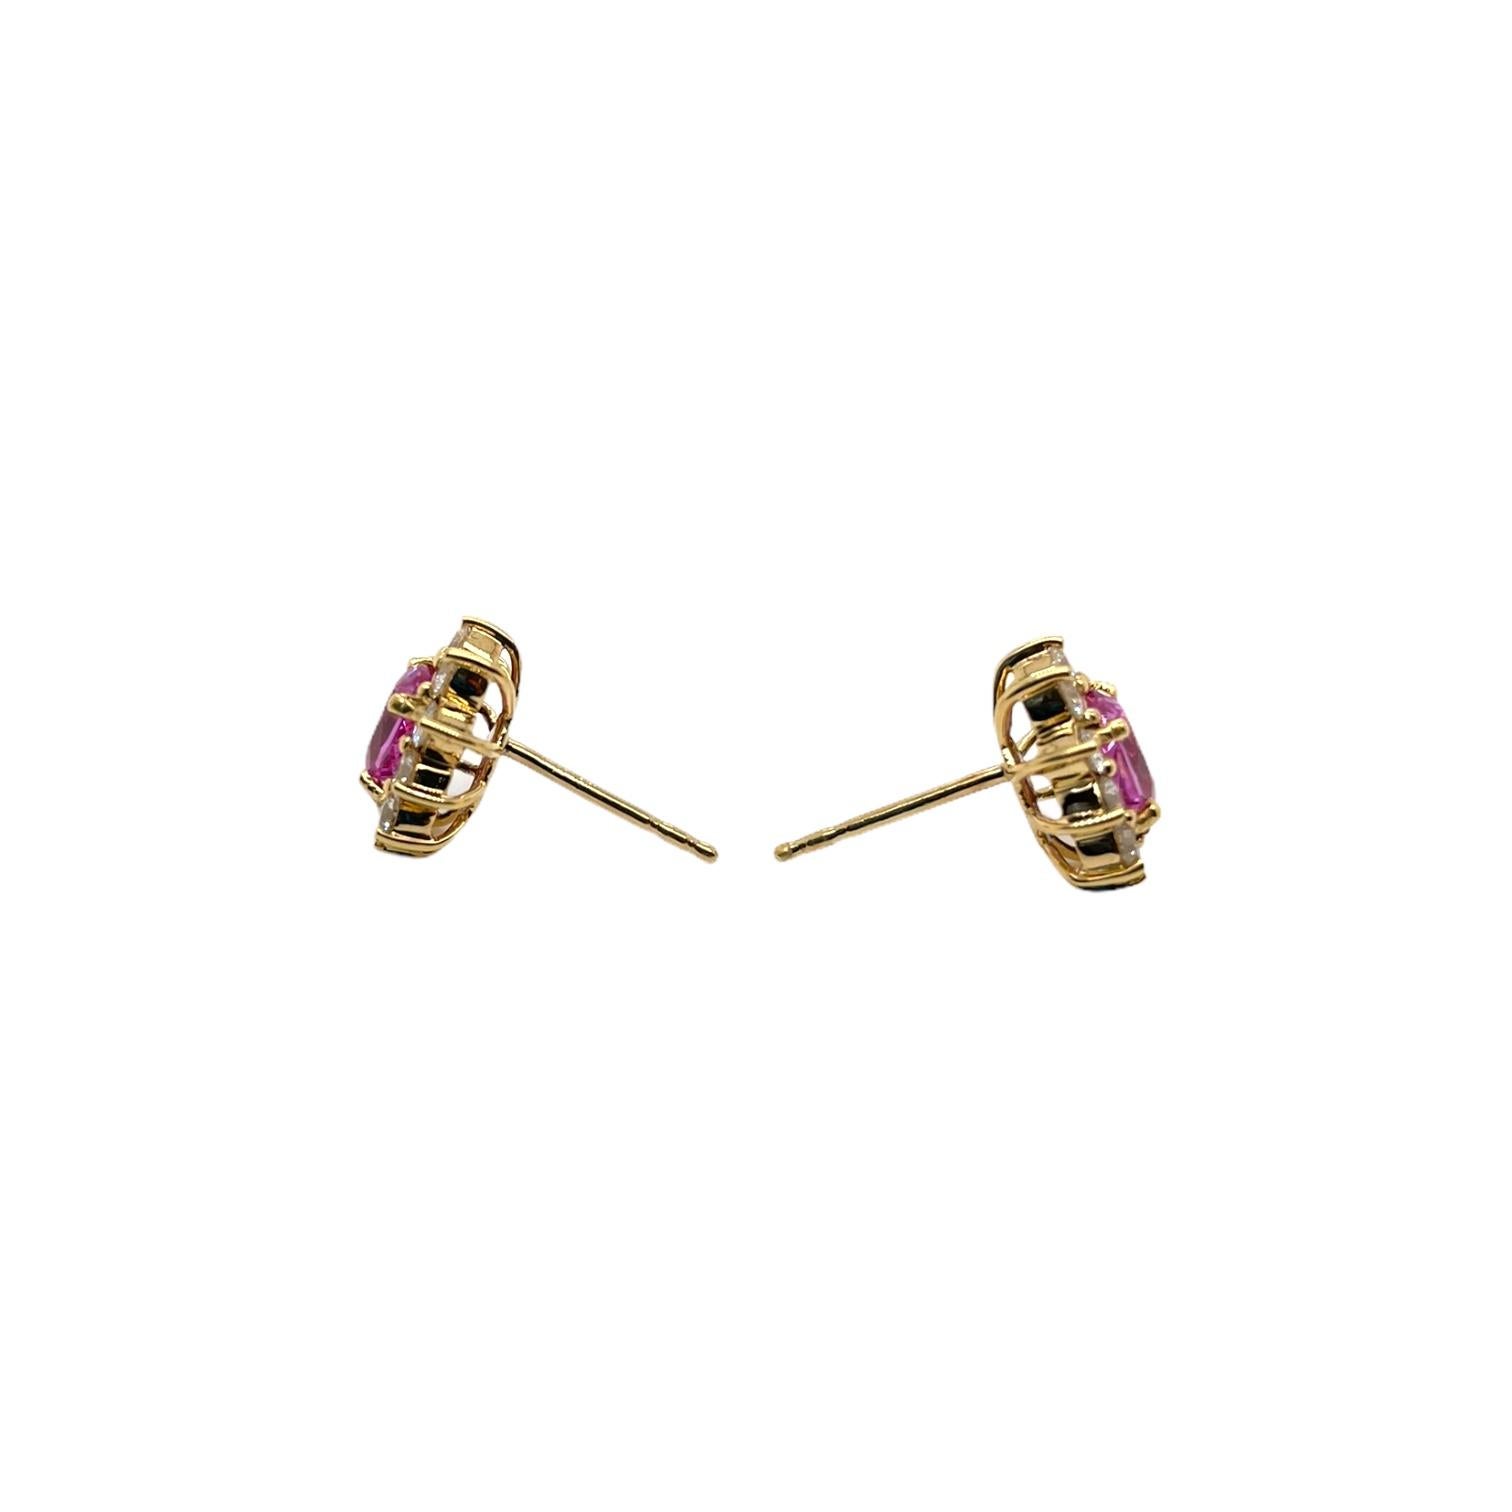 Romantic Oval Pink Sapphire & Diamond Stud Earrings in 18K Yellow Gold